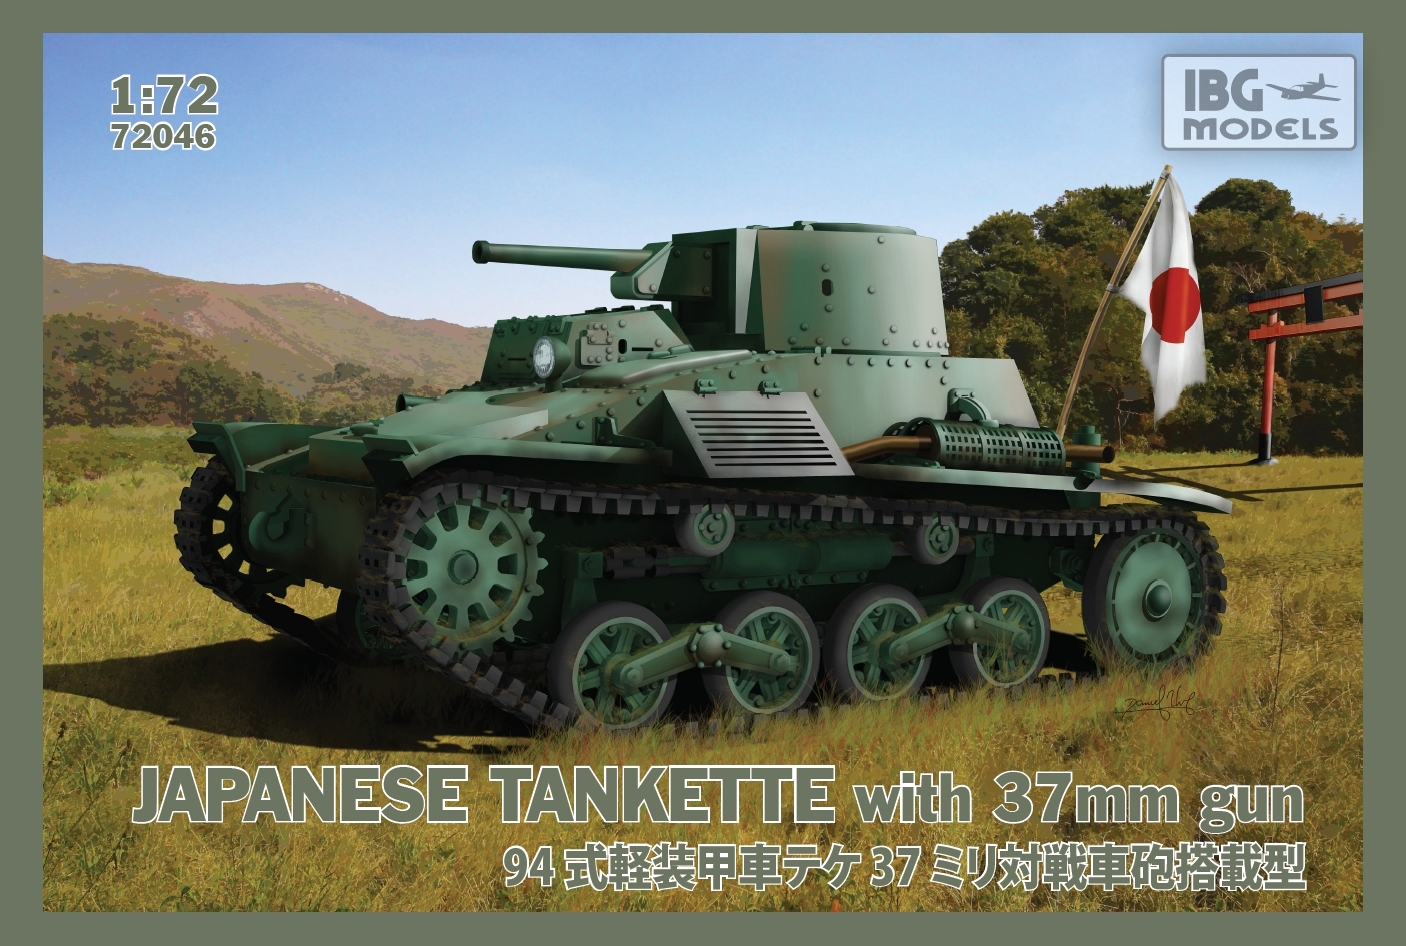 TYPE 94 Japanese Tankette, with 37mm gun